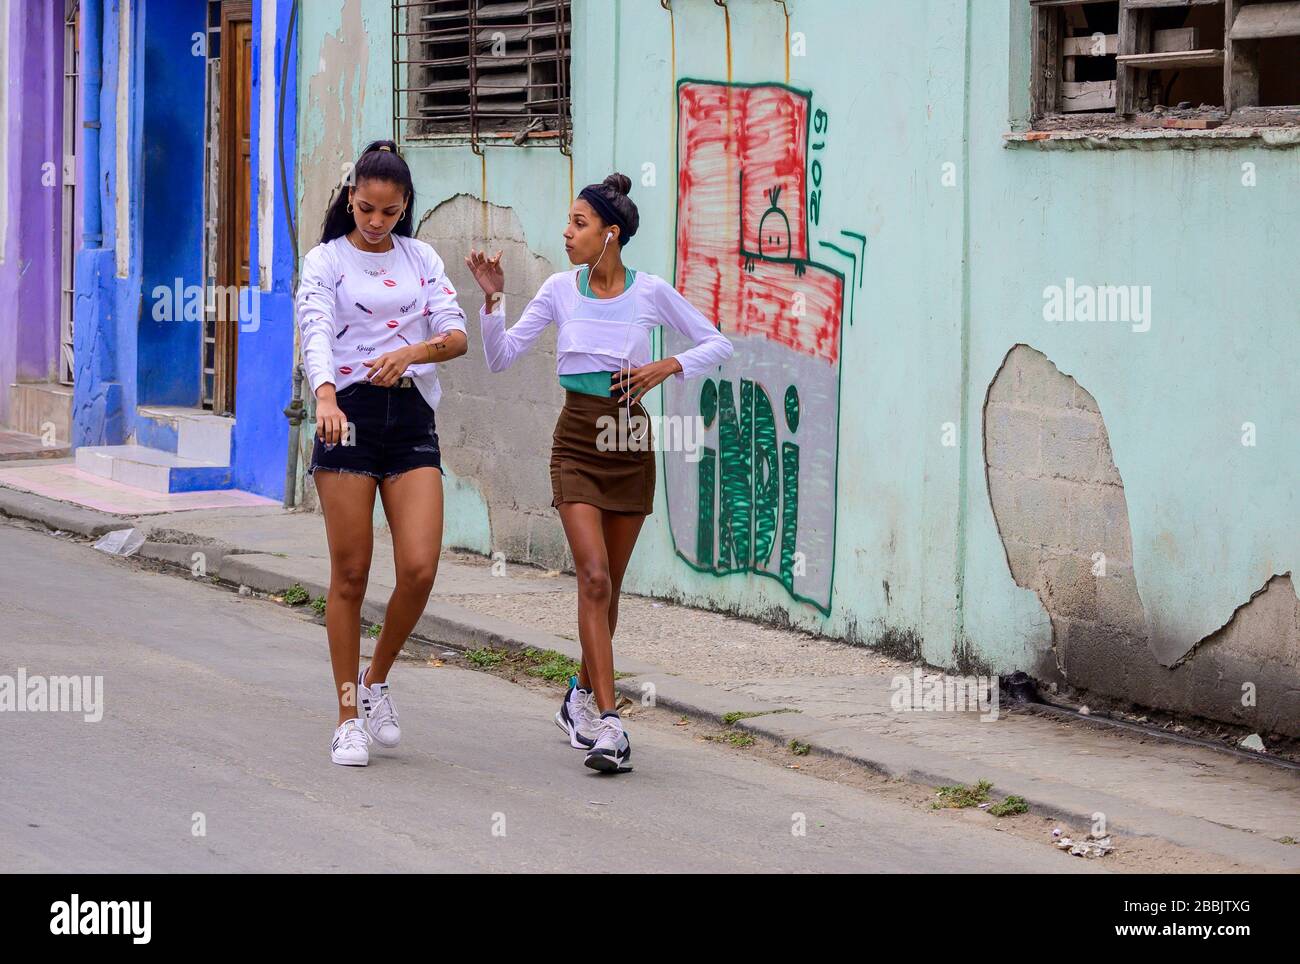 Young women walk past colorful walls, Havana, Cuba Stock Photo